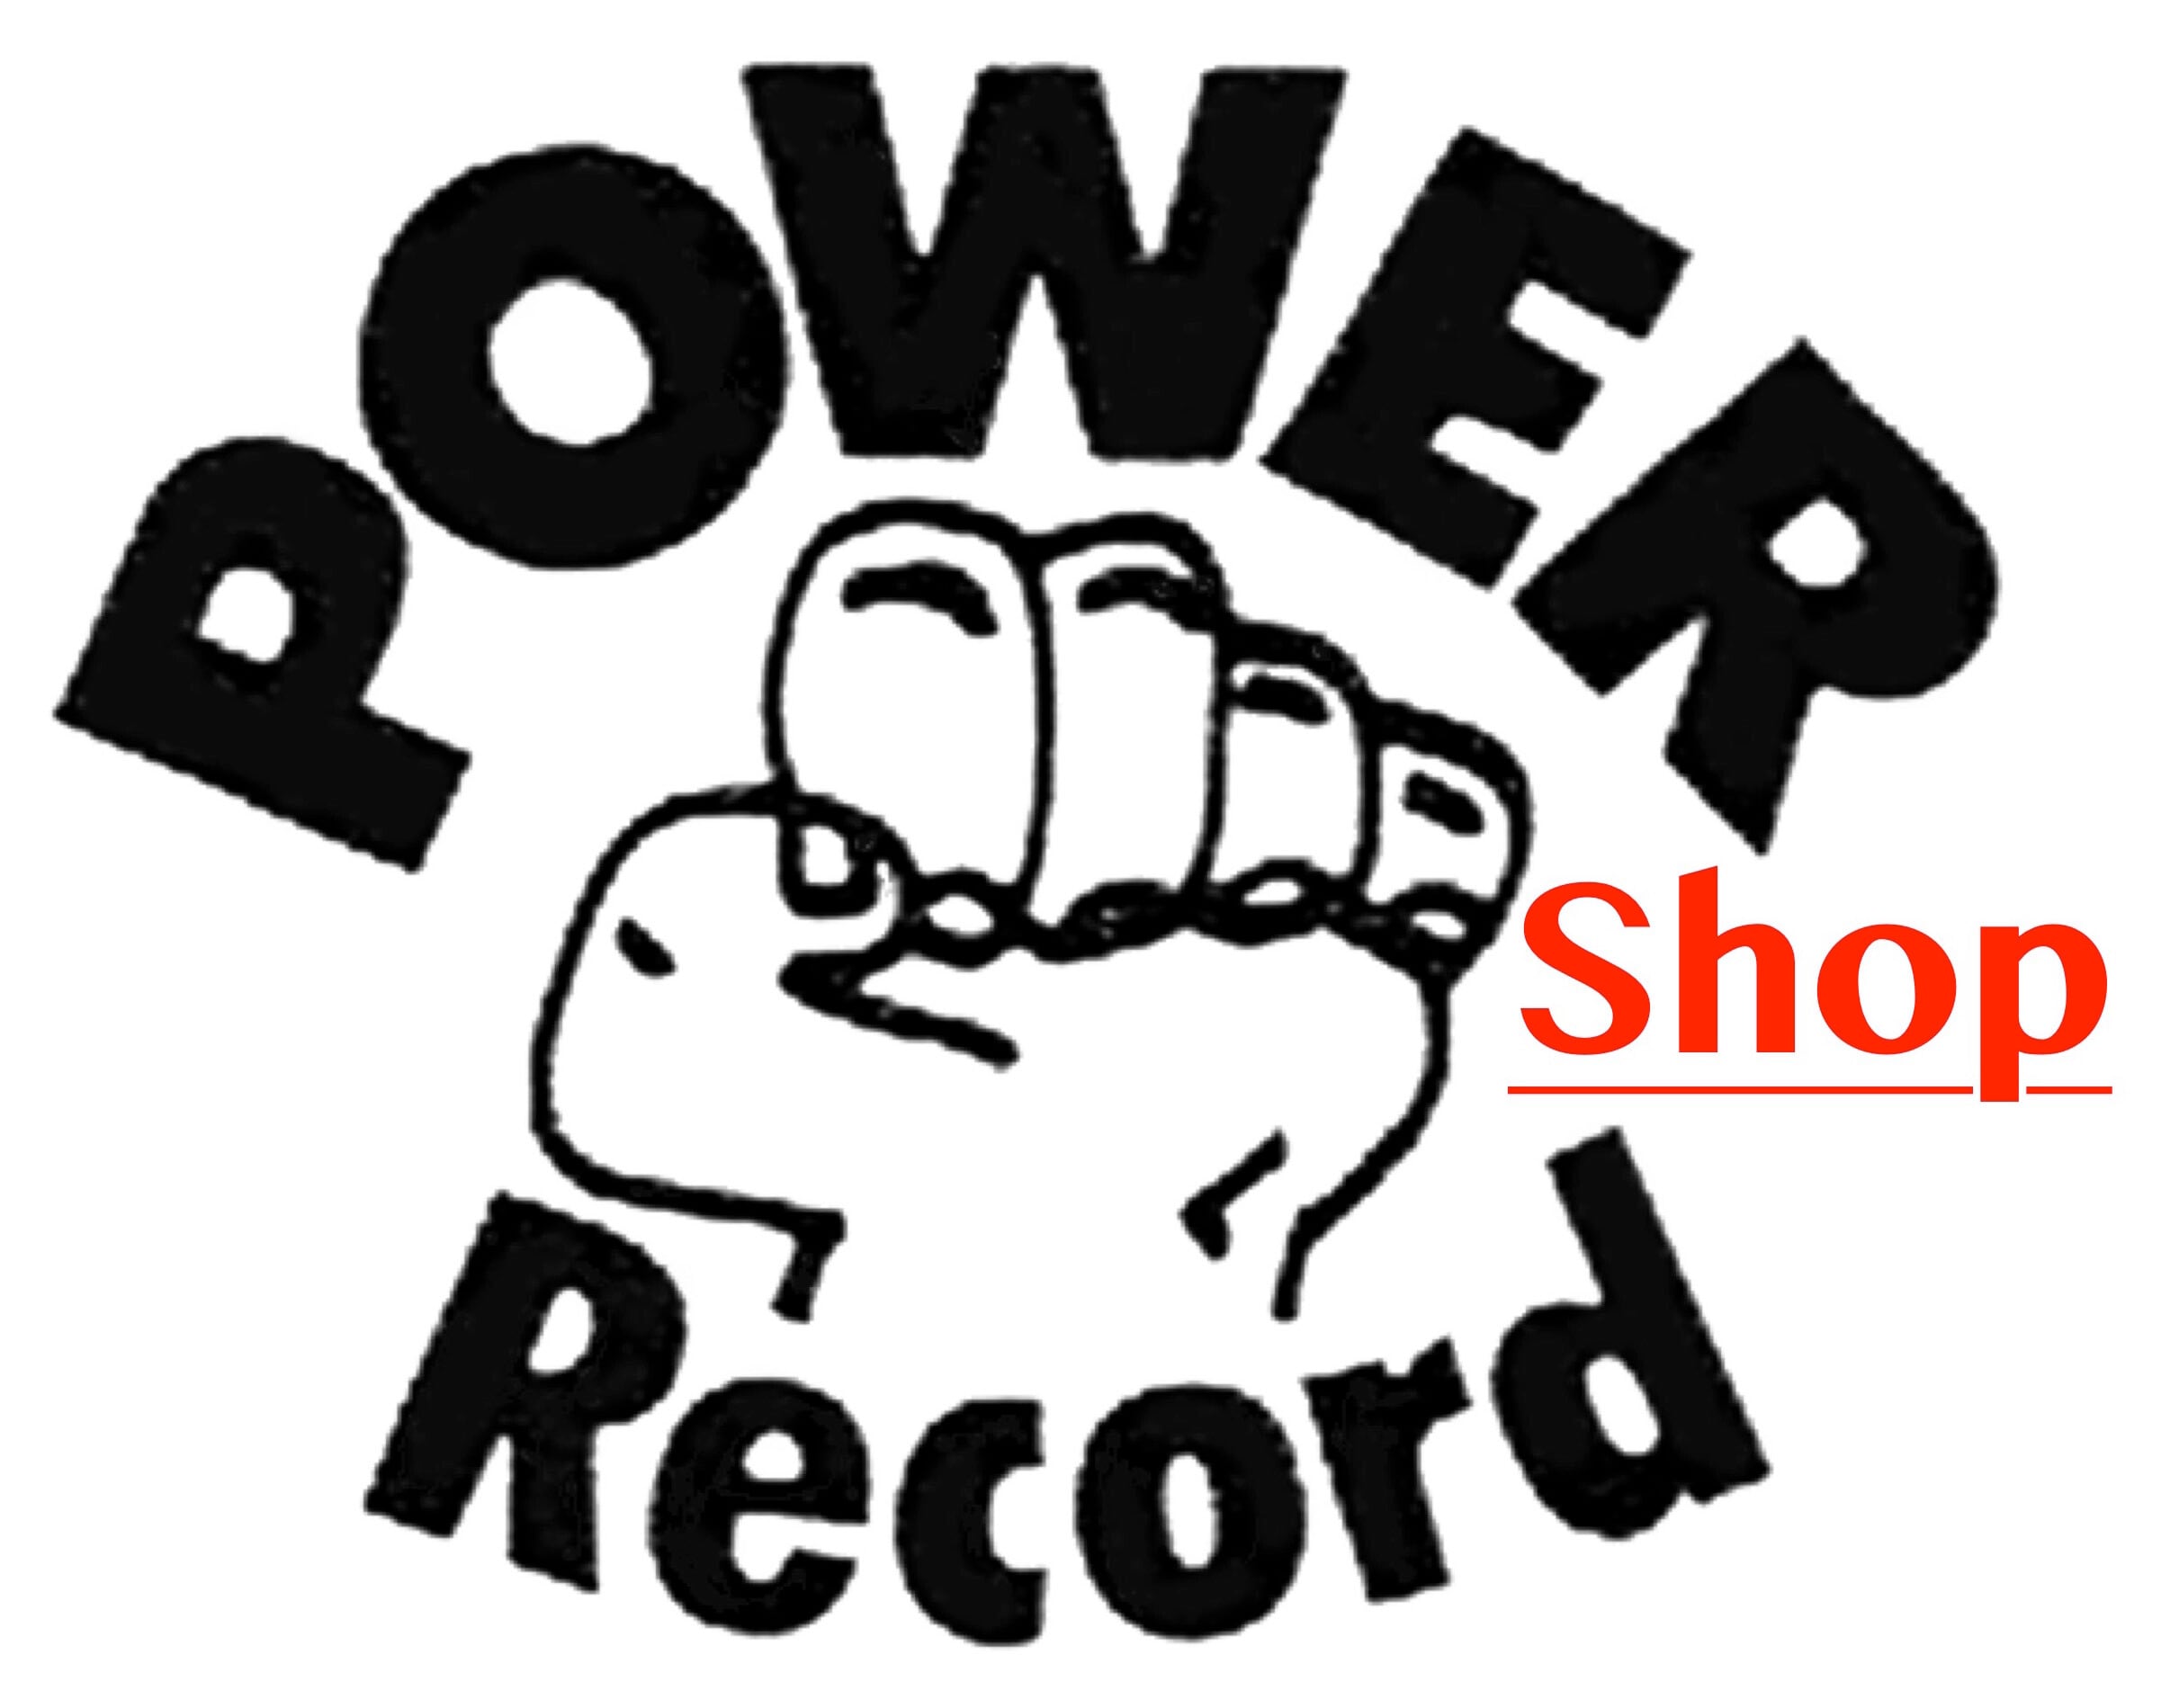 POWER RECORD SHOP